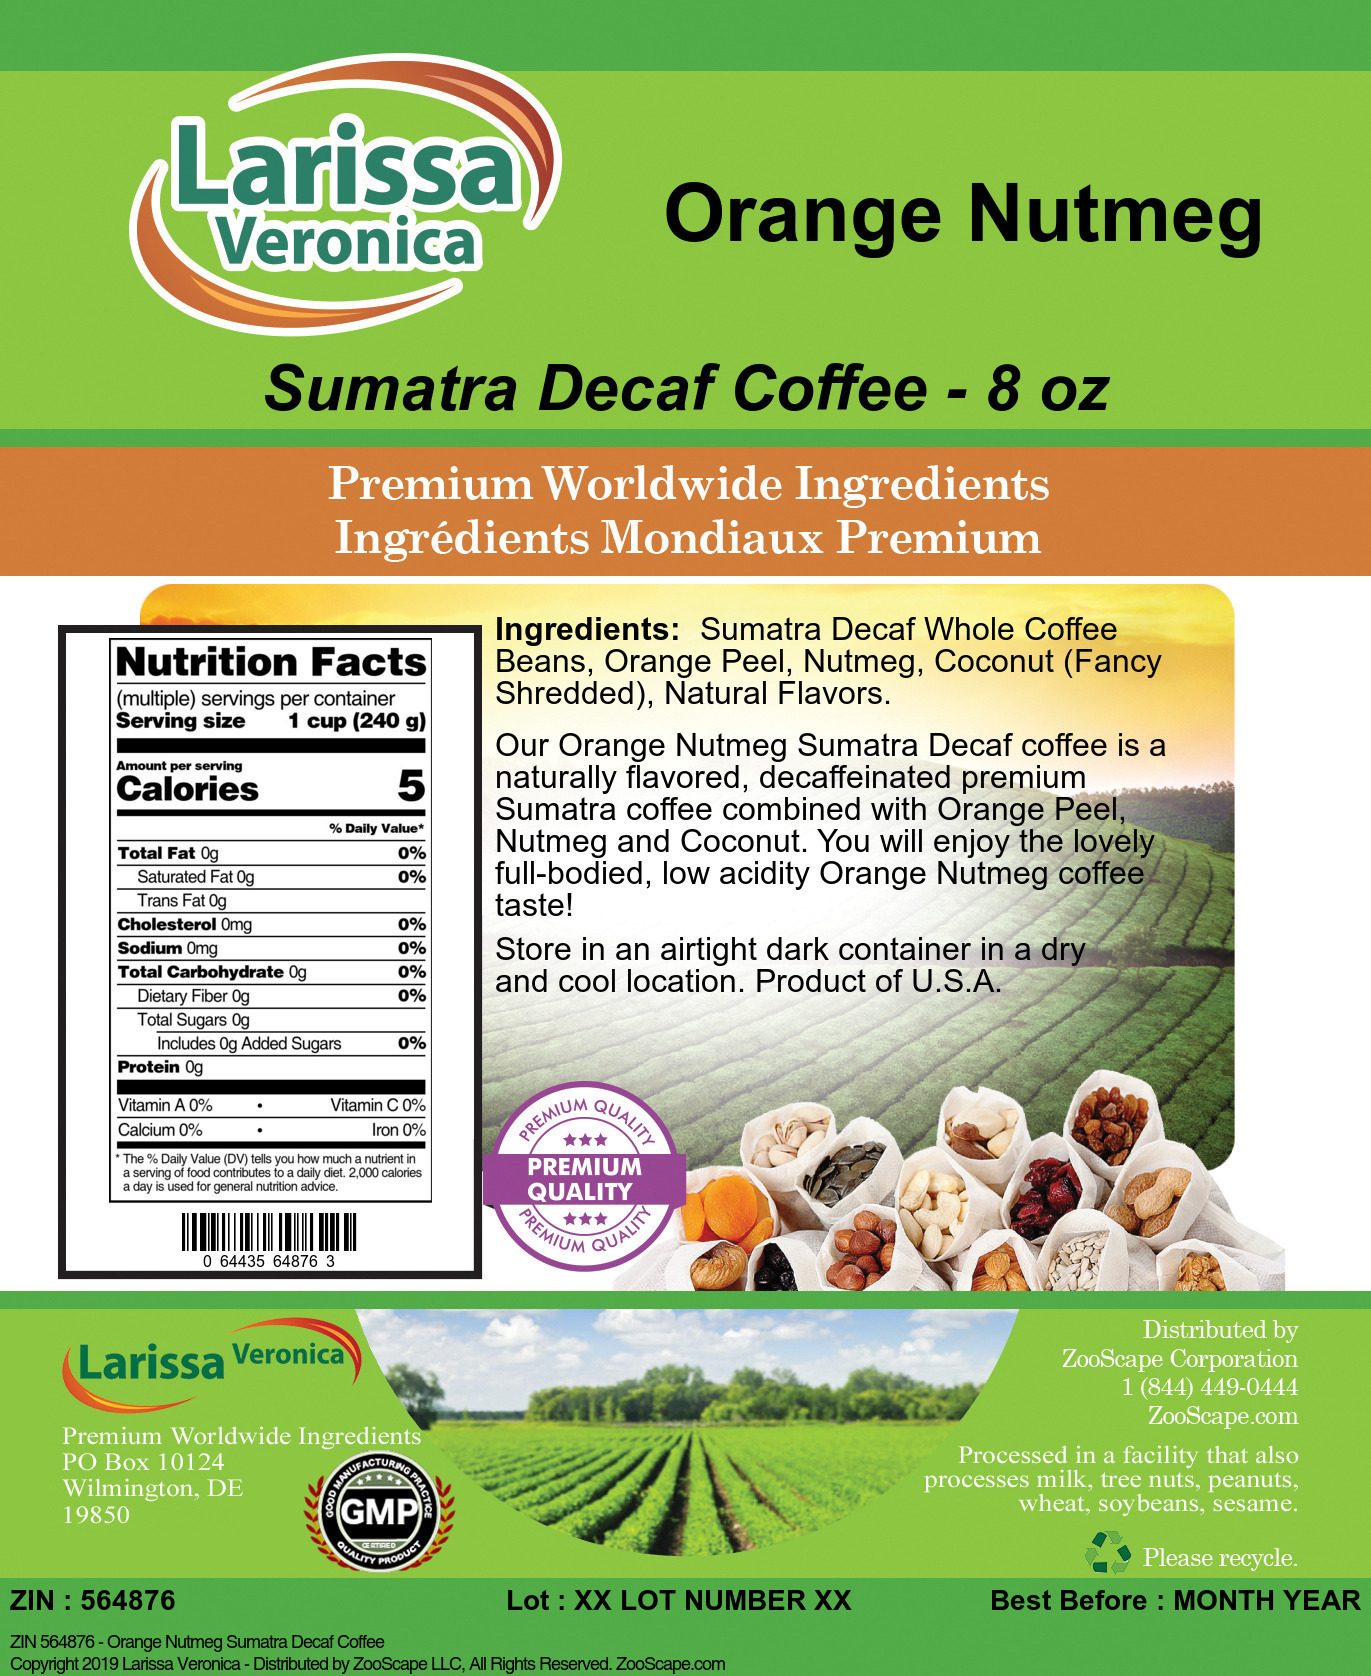 Orange Nutmeg Sumatra Decaf Coffee - Label